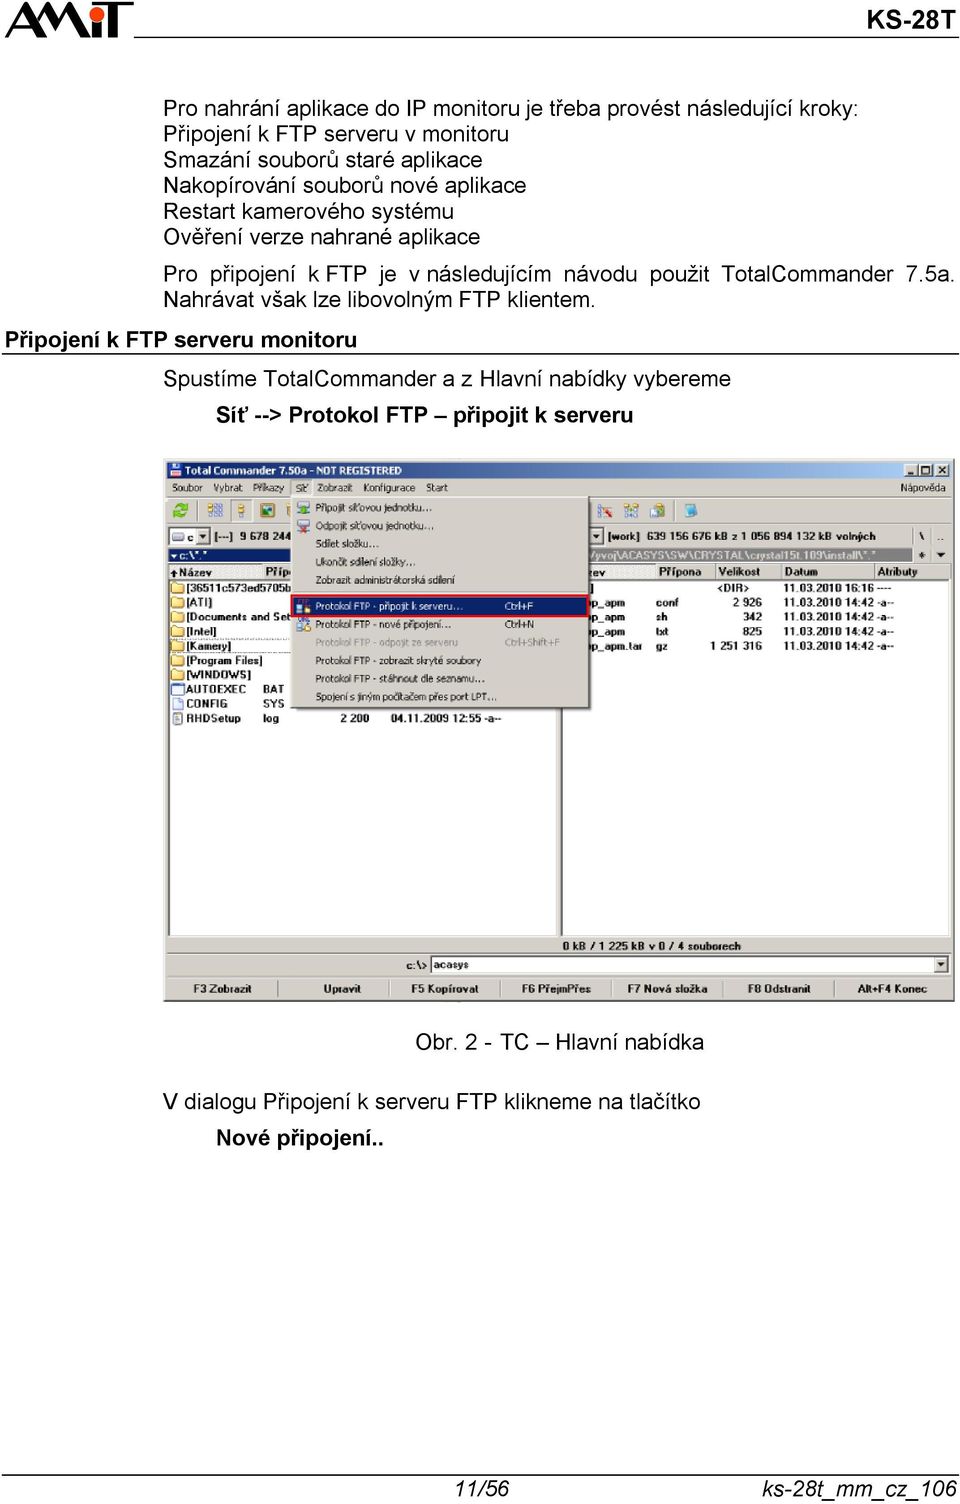 TotalCommander 7.5a. Nahrávat však lze libovolným FTP klientem.